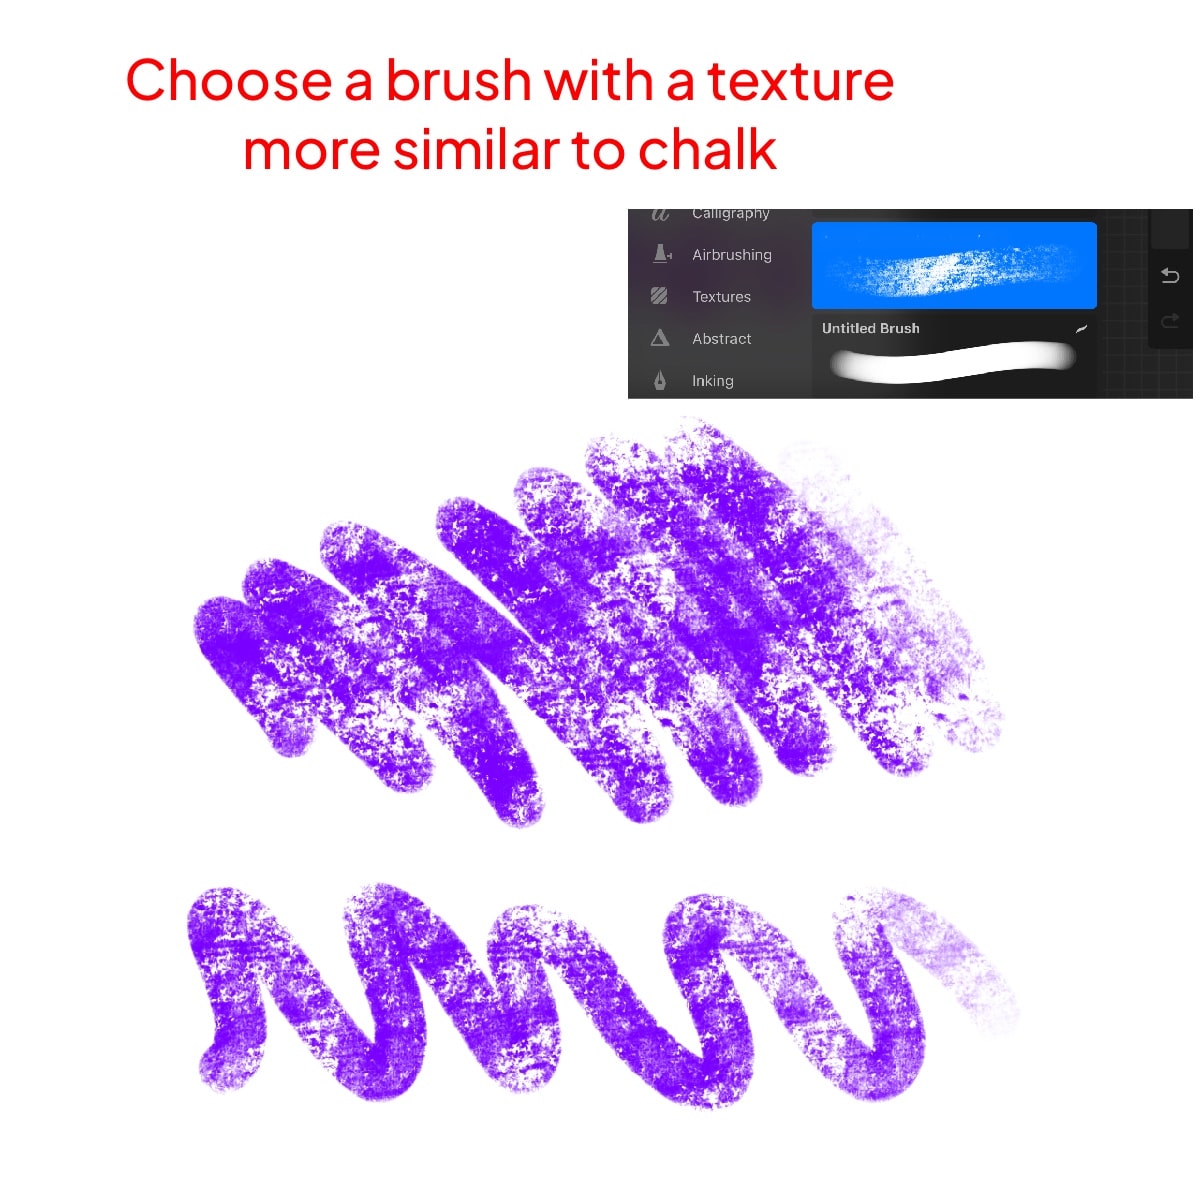 Chalk-like brush texture